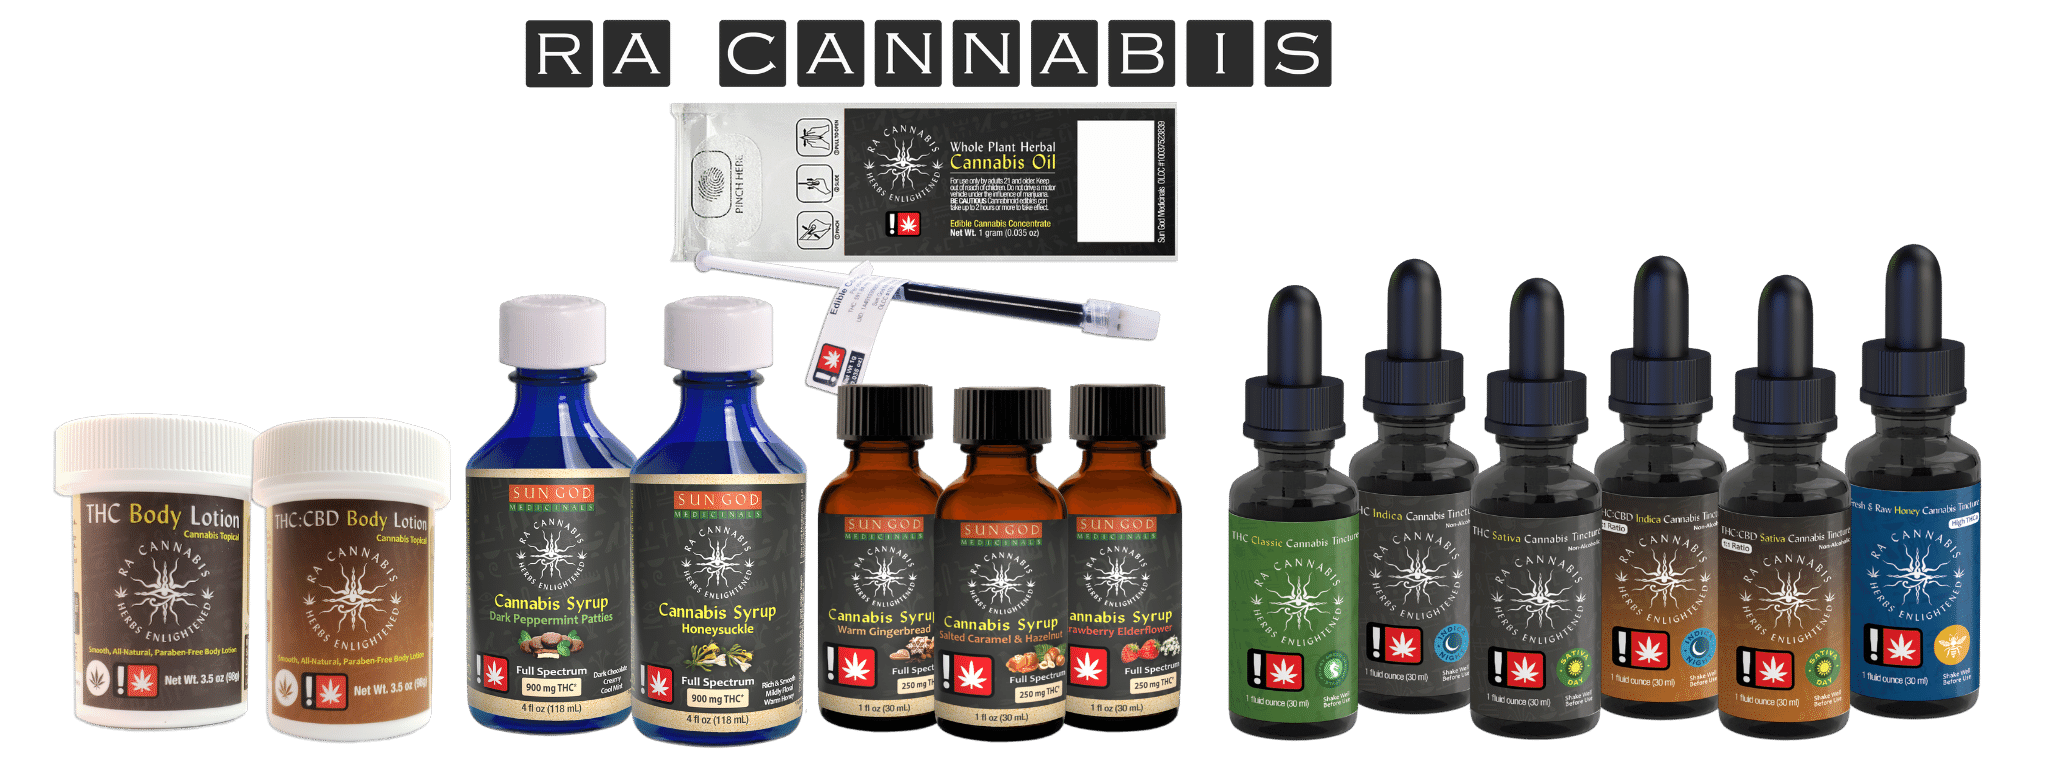 Ra Cannabis Products - by Sun God Medicinals